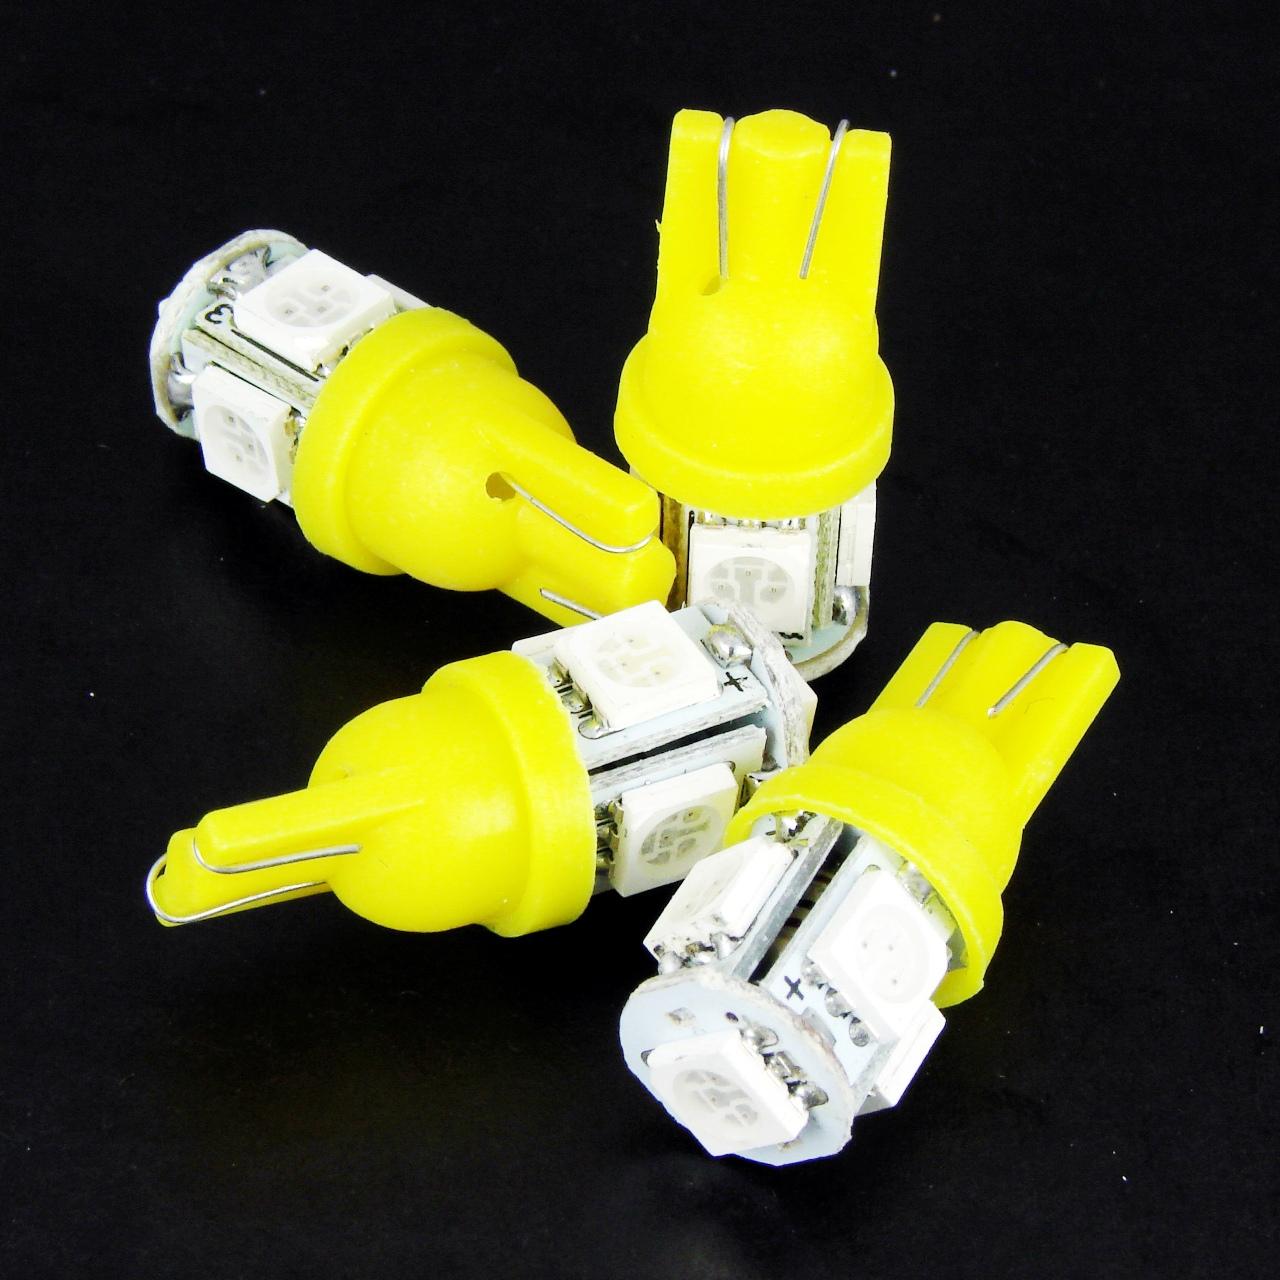   _5 LED yellow T10 W5W Car Light Bulbs